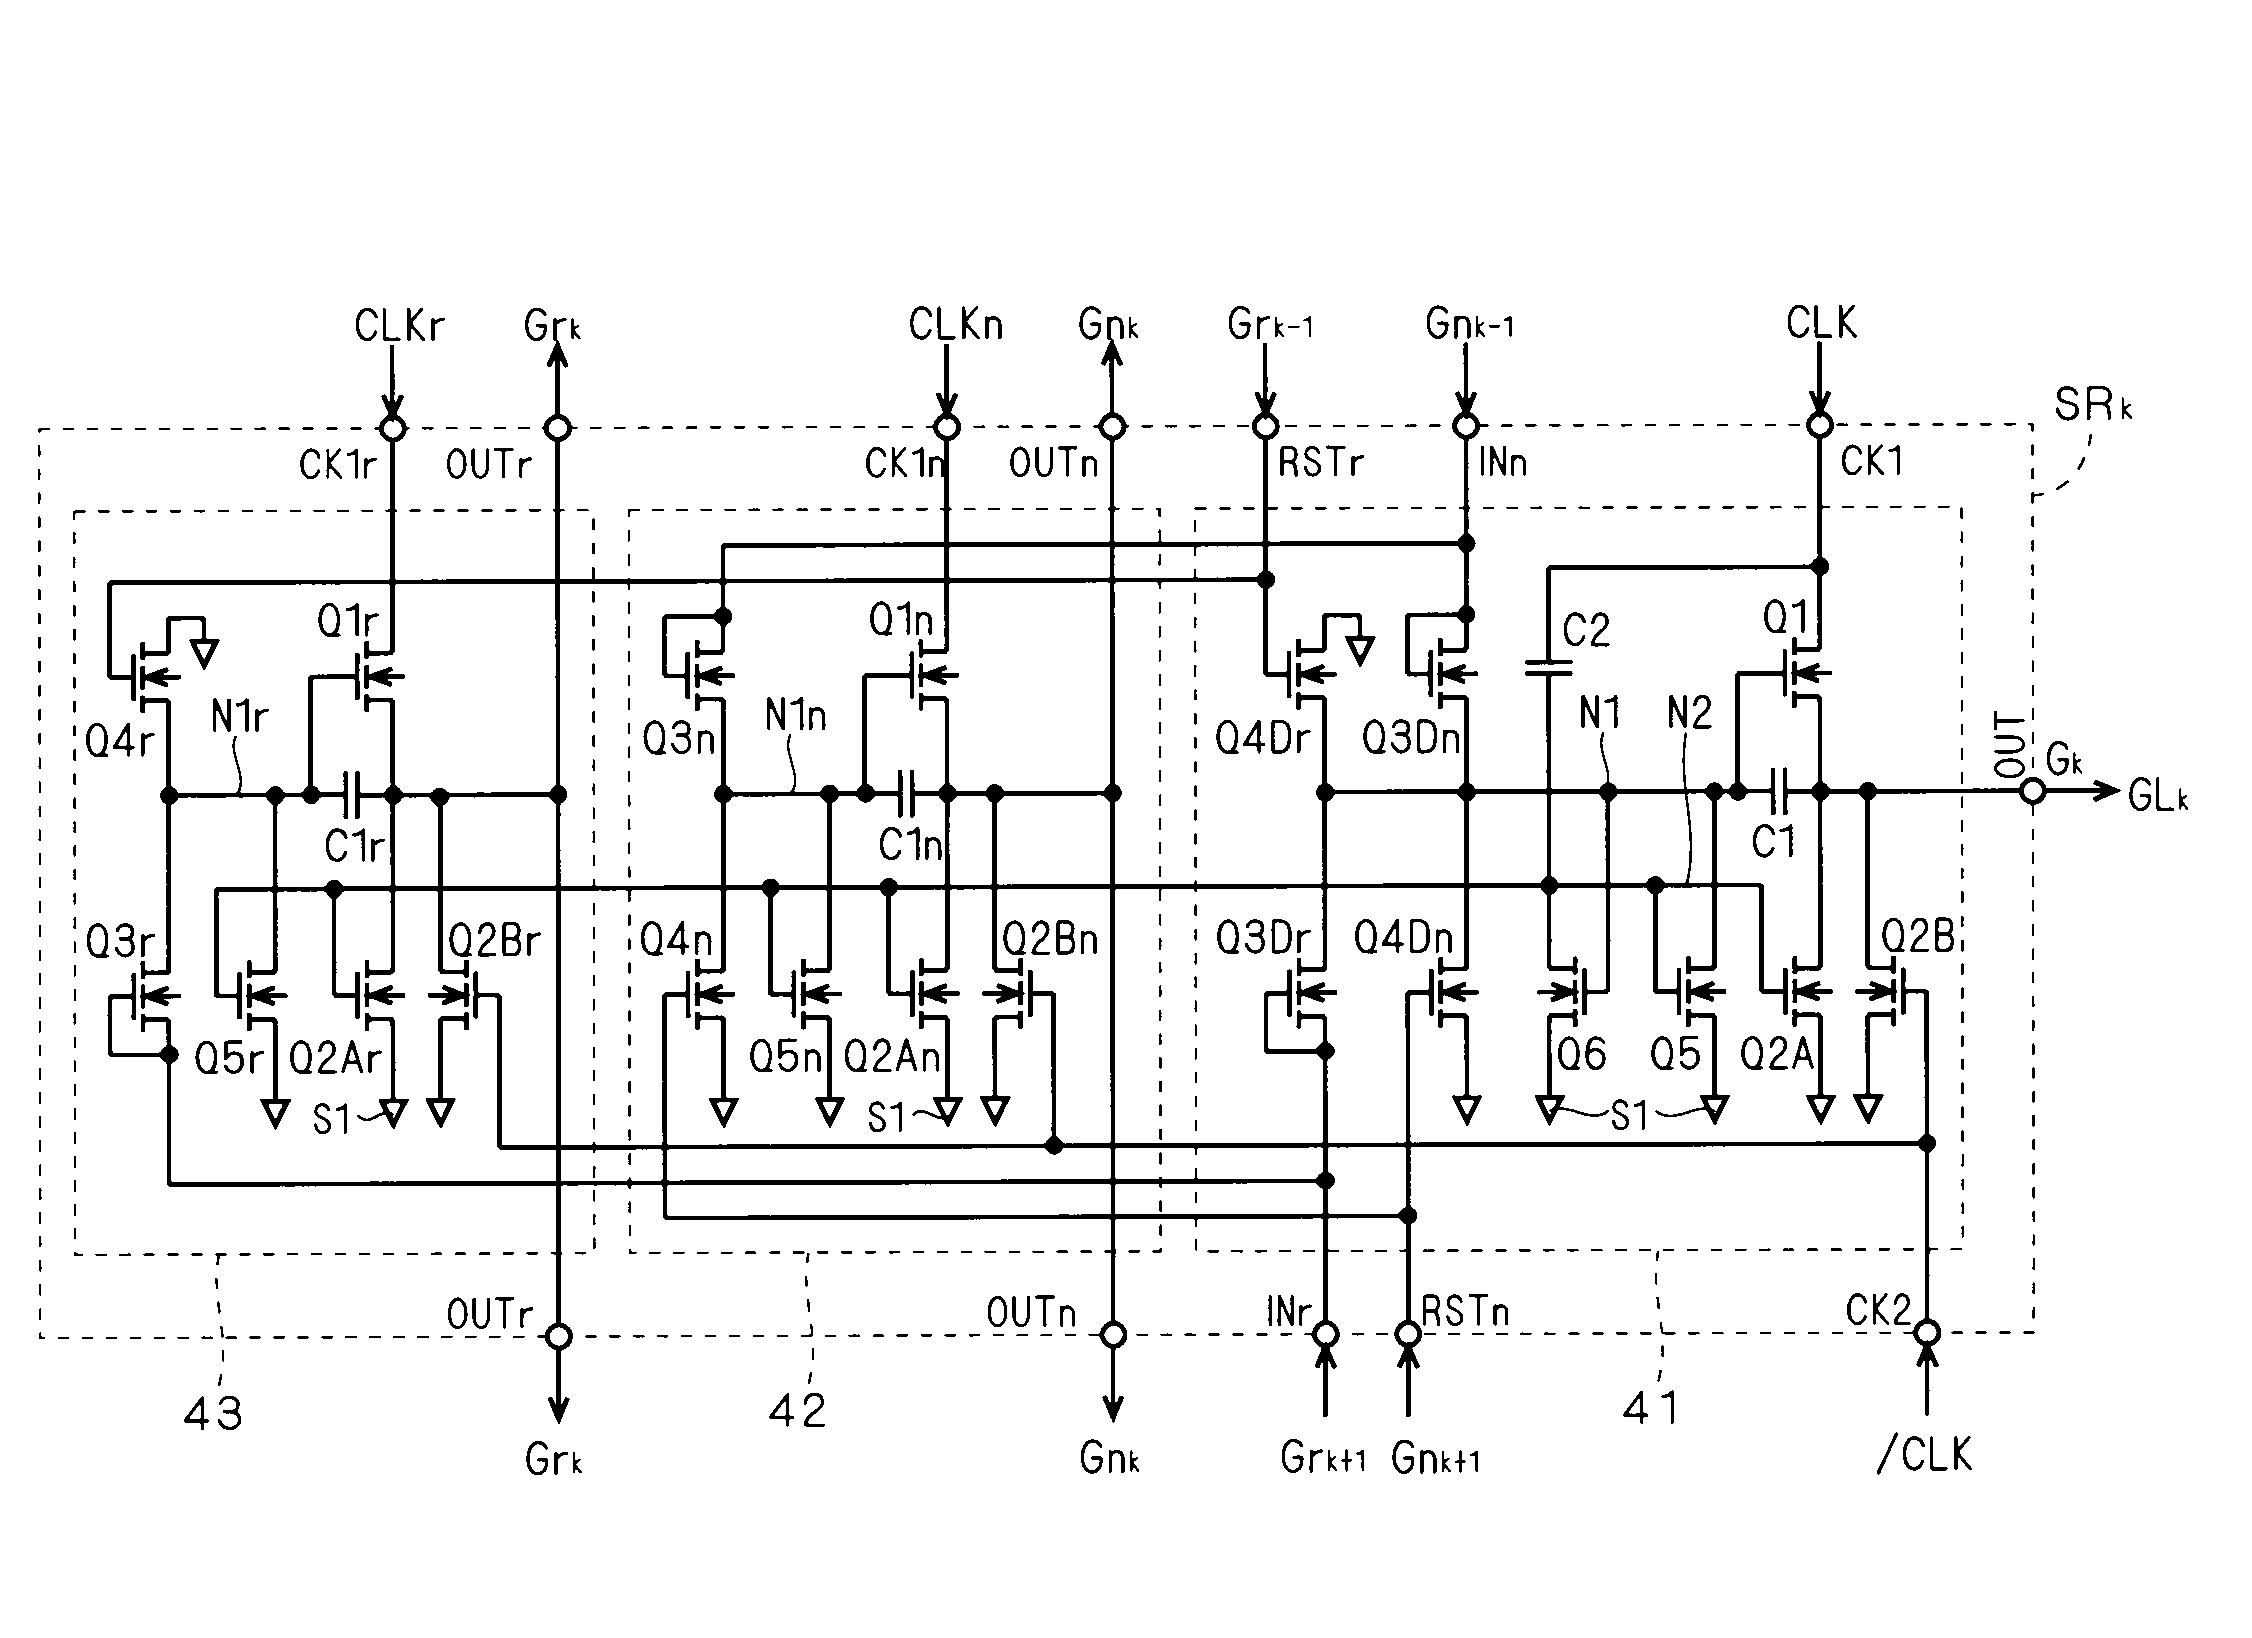 Shift register circuit